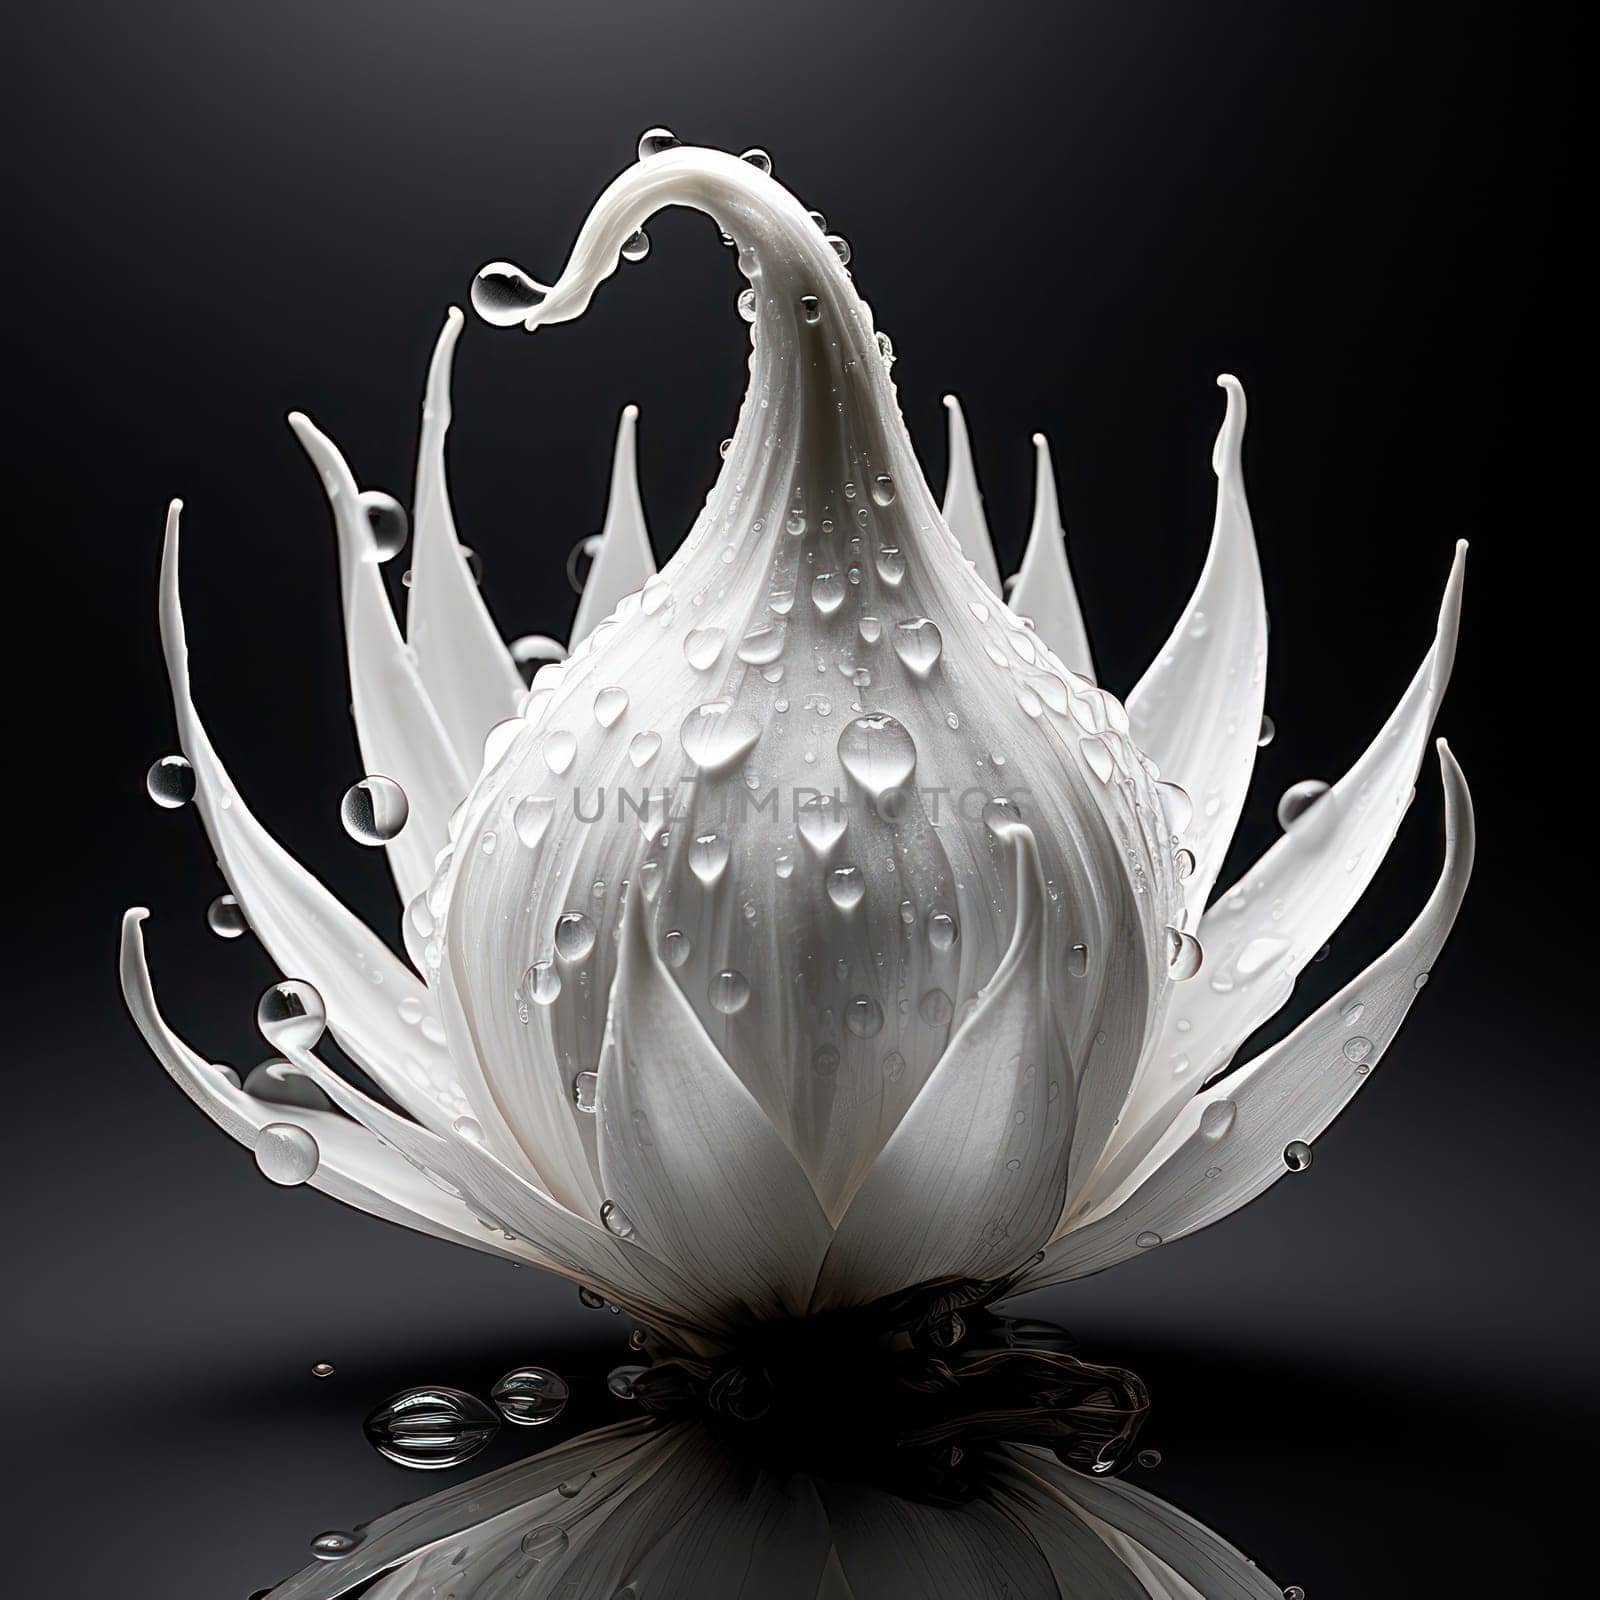 Pristine Beauty: White Lotus Blossom in a Serene Garden Oasis by Vichizh